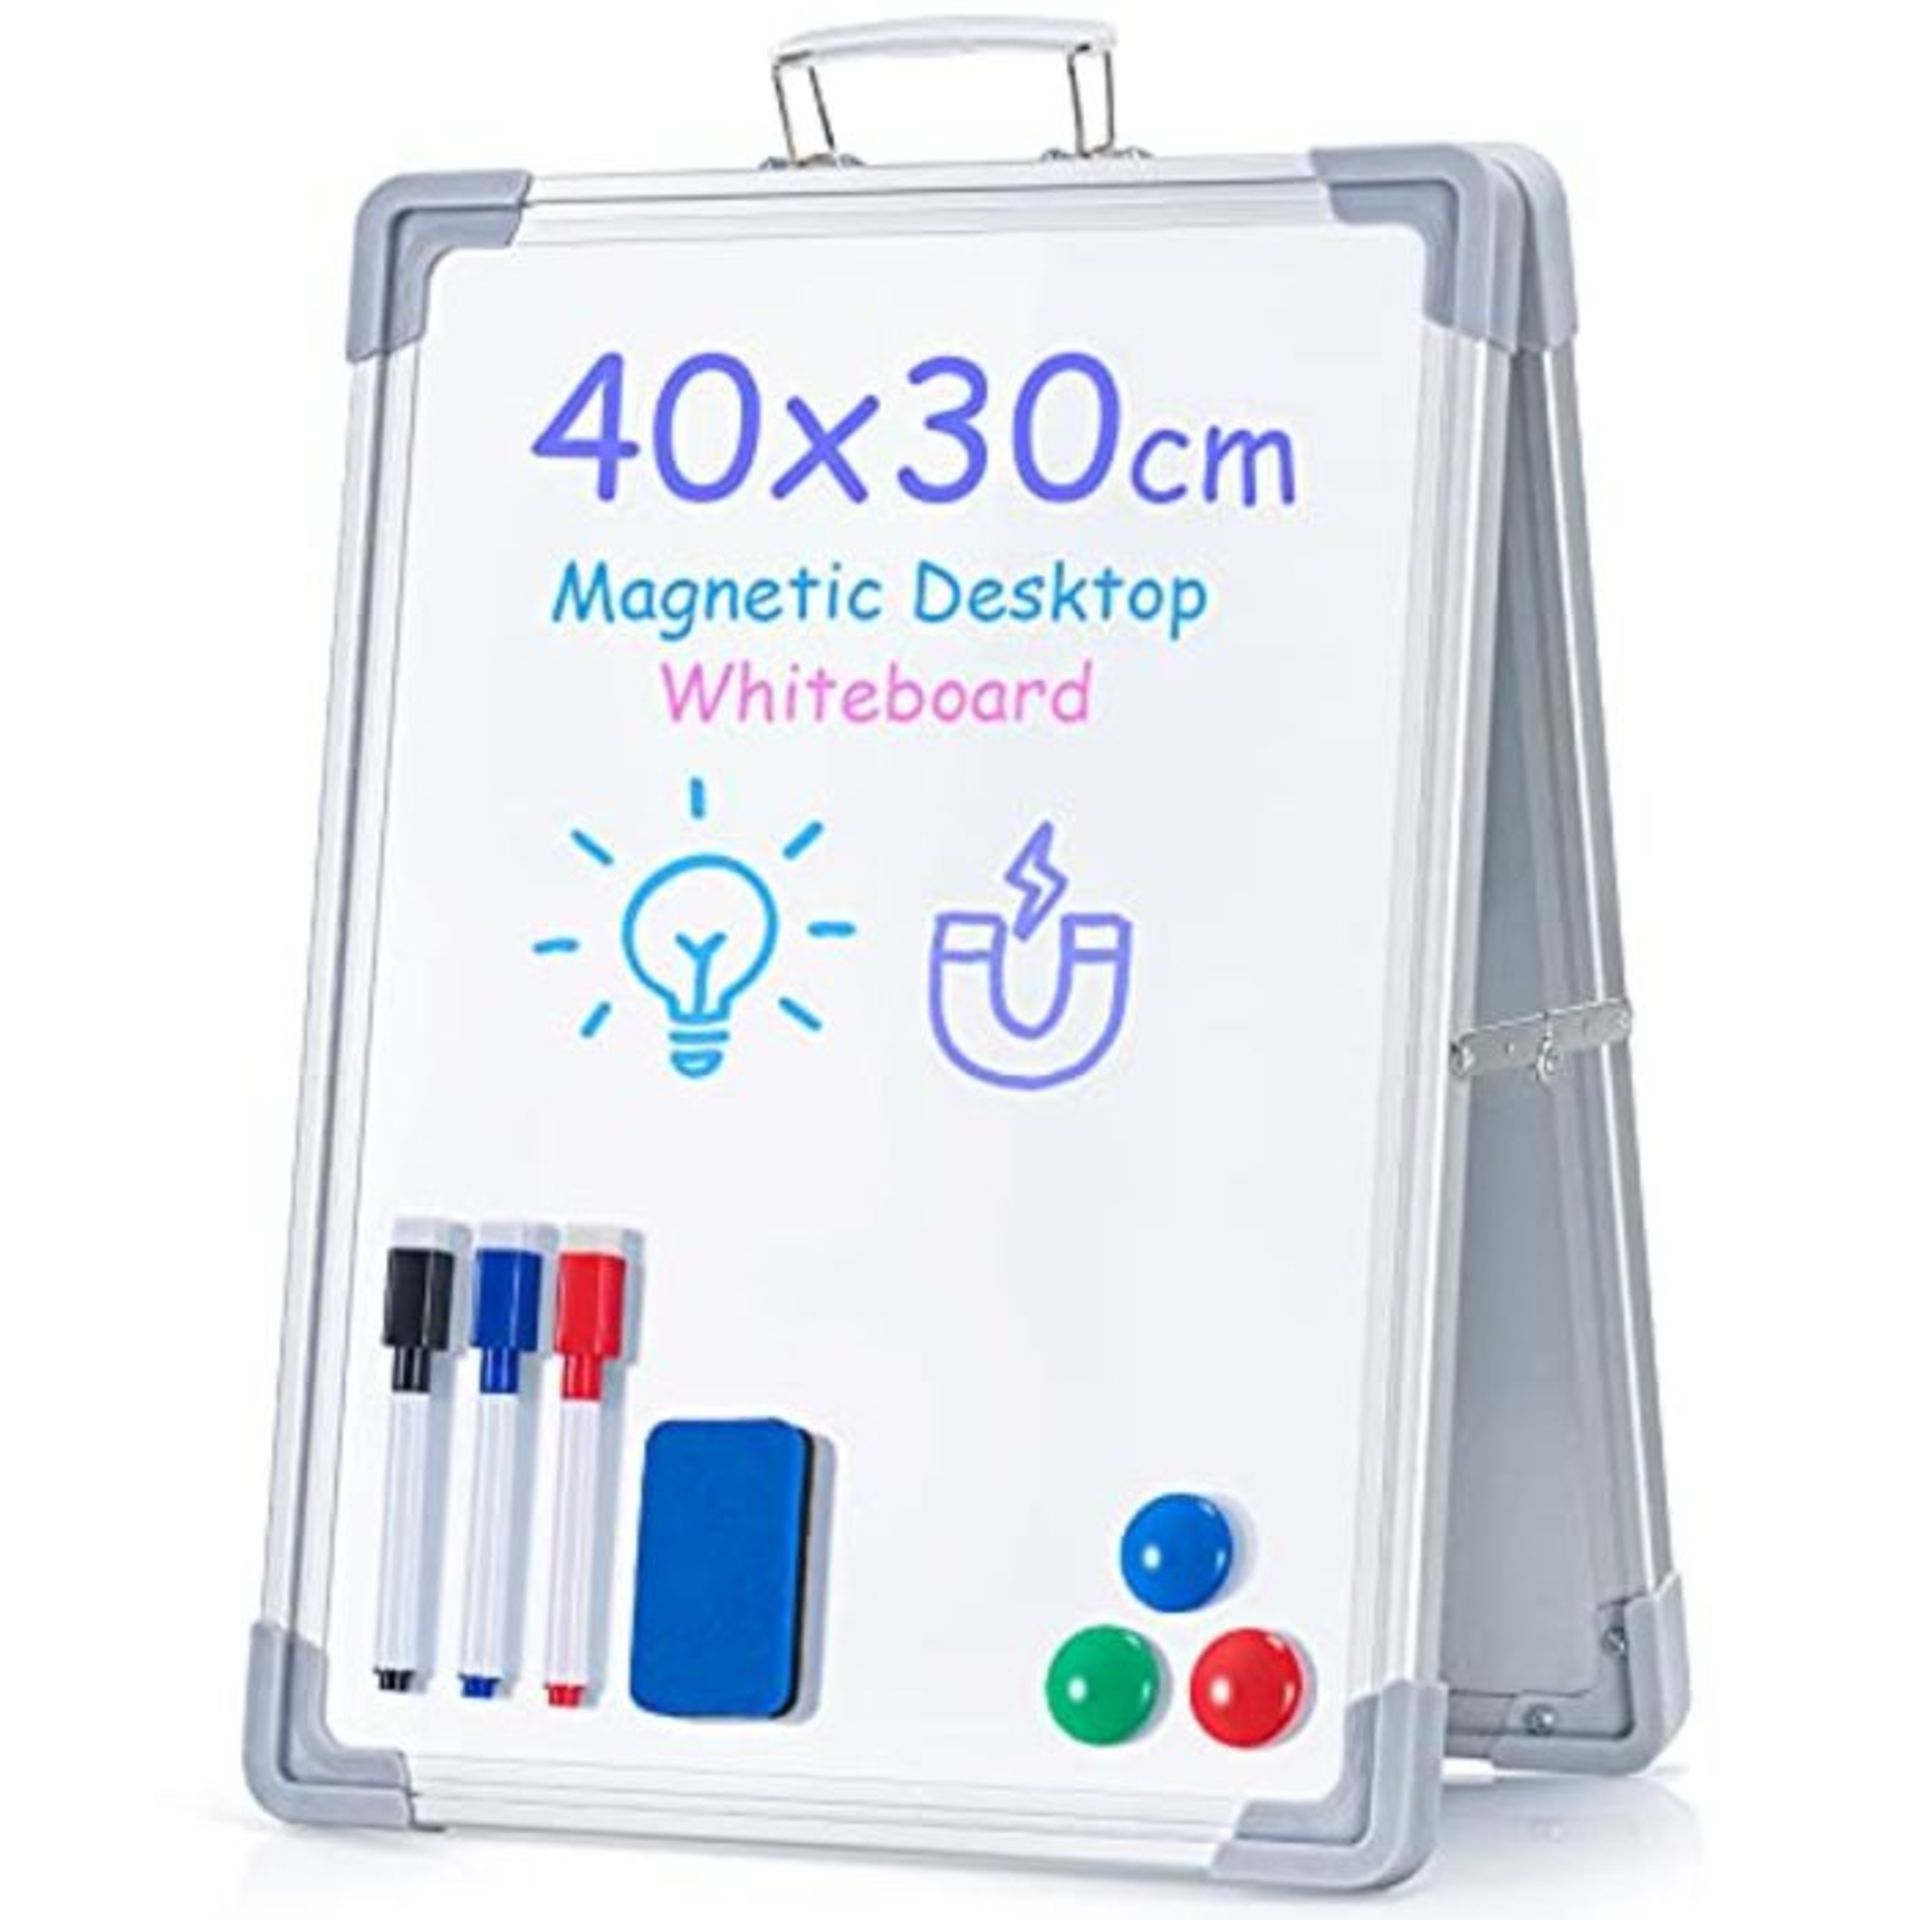 Small Dry Erase White Board for Desk, ARCOBIS 40X30 cm Portable Magnetic Whiteboard wi